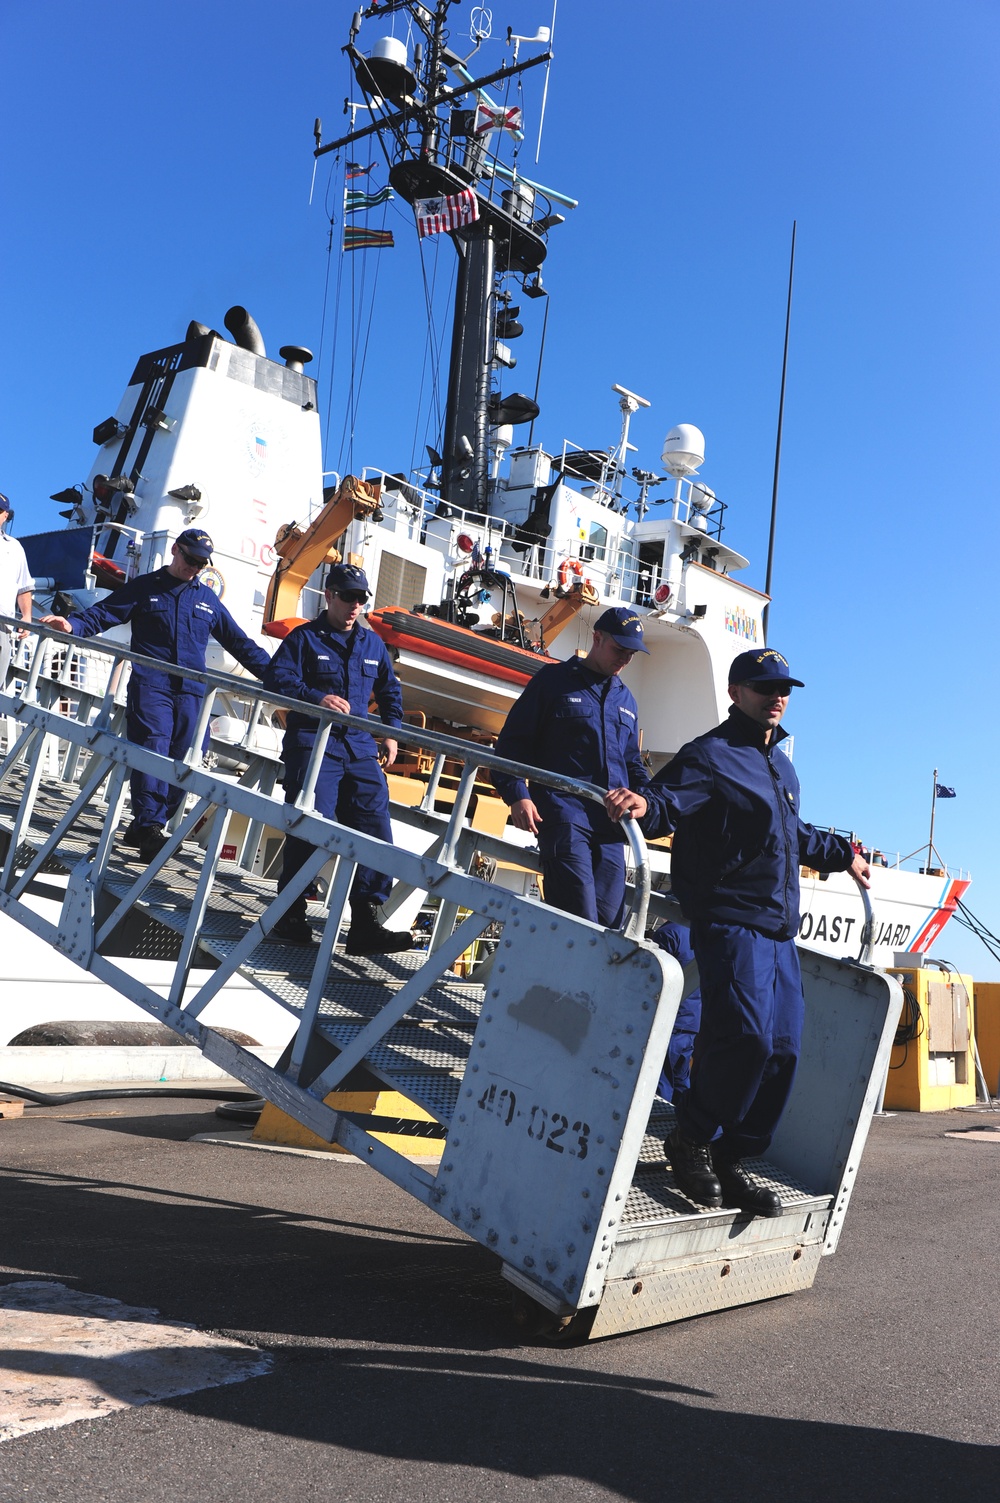 Coast Guard Cutter Valiant return to homeport